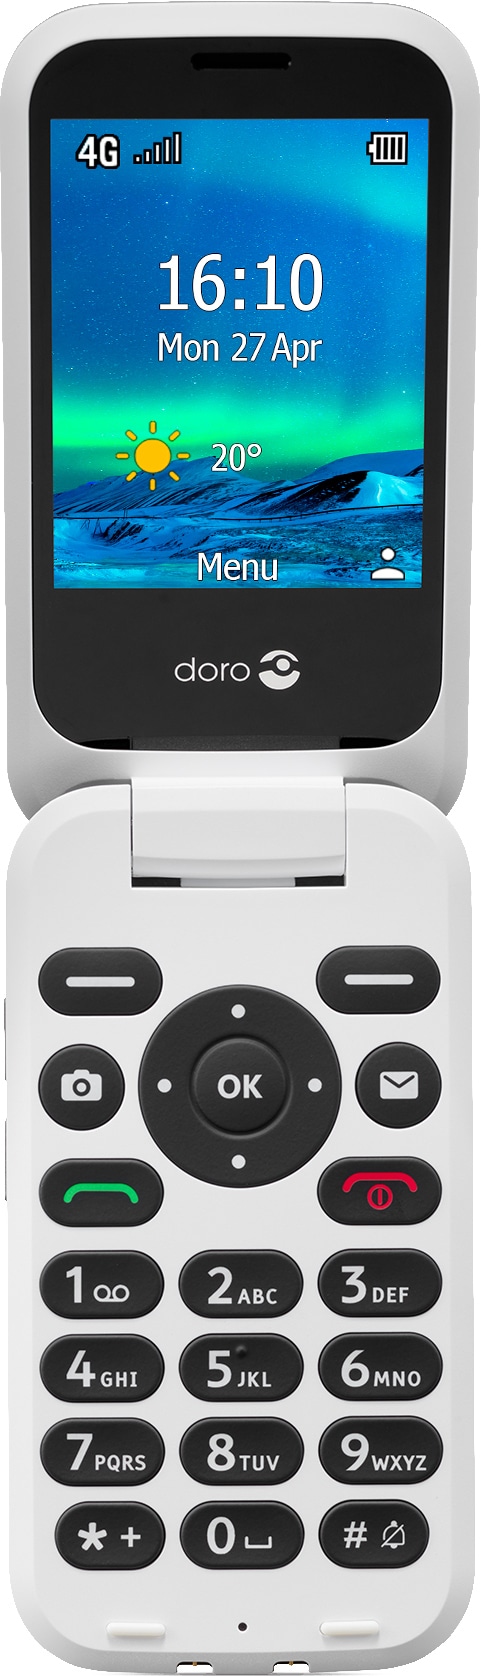 Doro 6821 mobiltelefon (sort/hvid) | Elgiganten